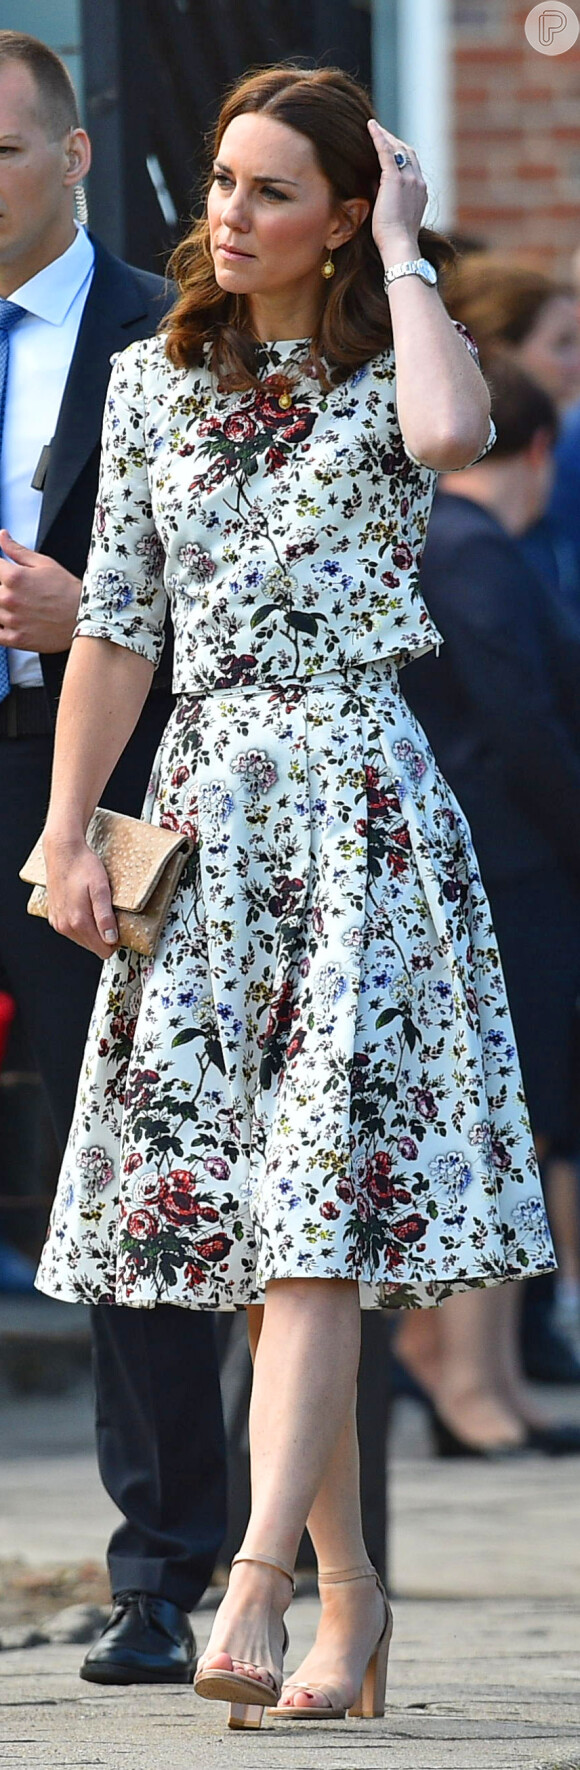 Kate Middleton complementou o look floral com acessórios nude